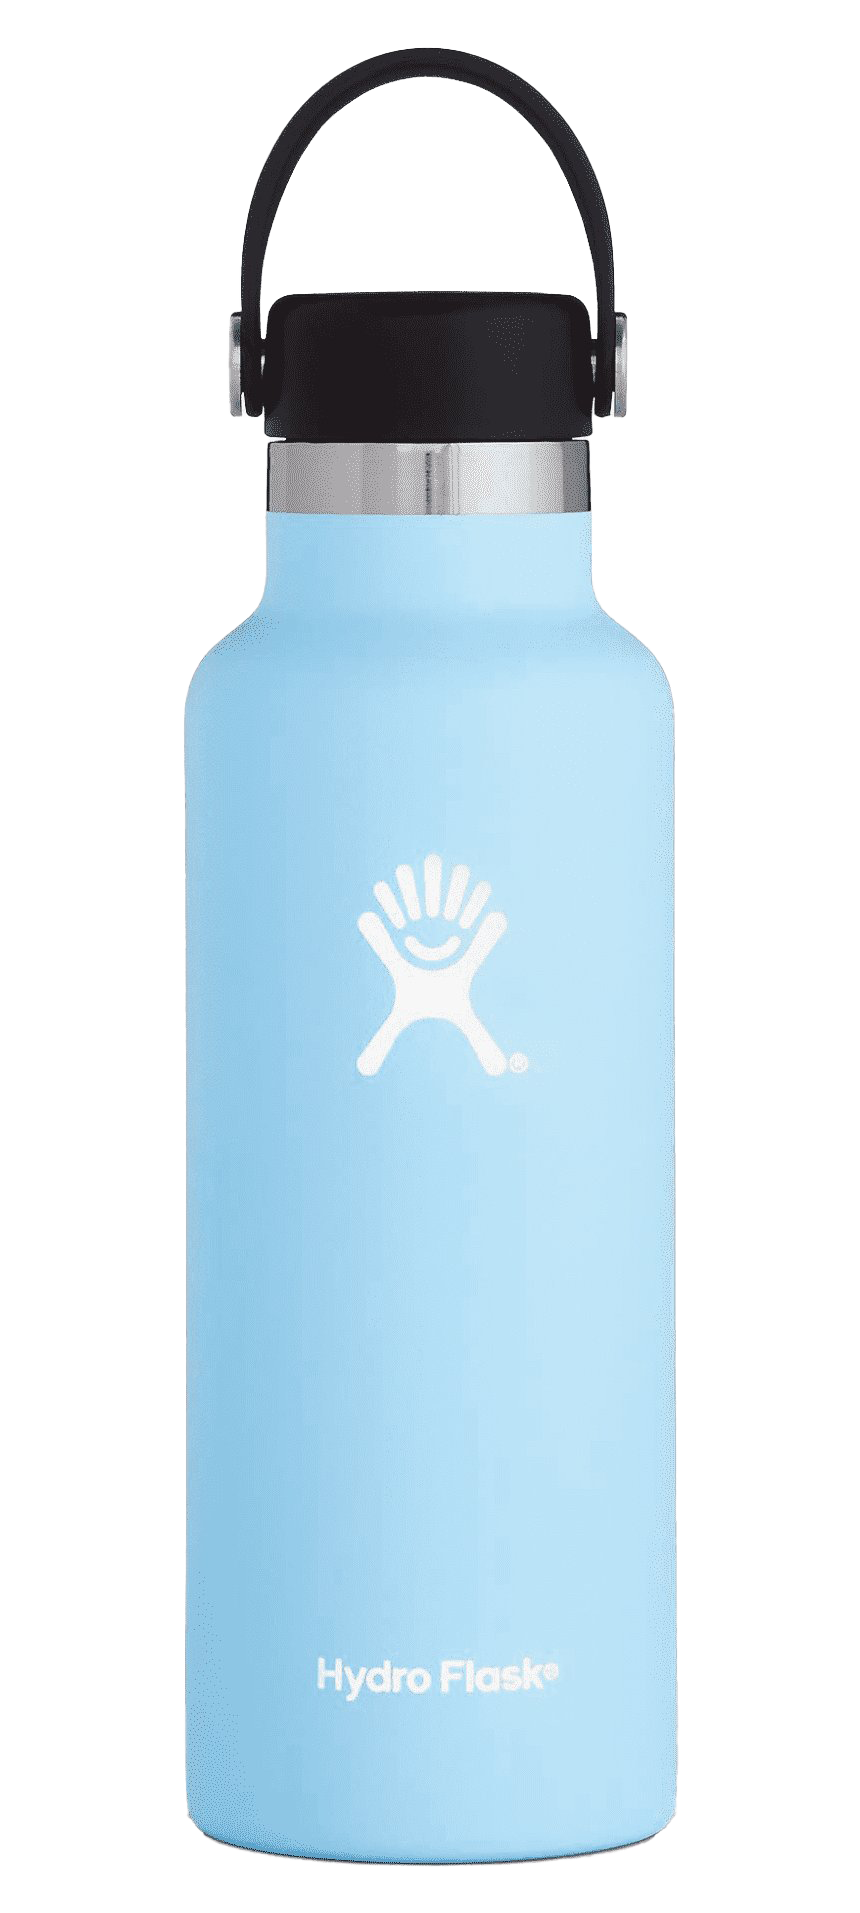 Hydro-Flasche-Flasche-PNG-Datei